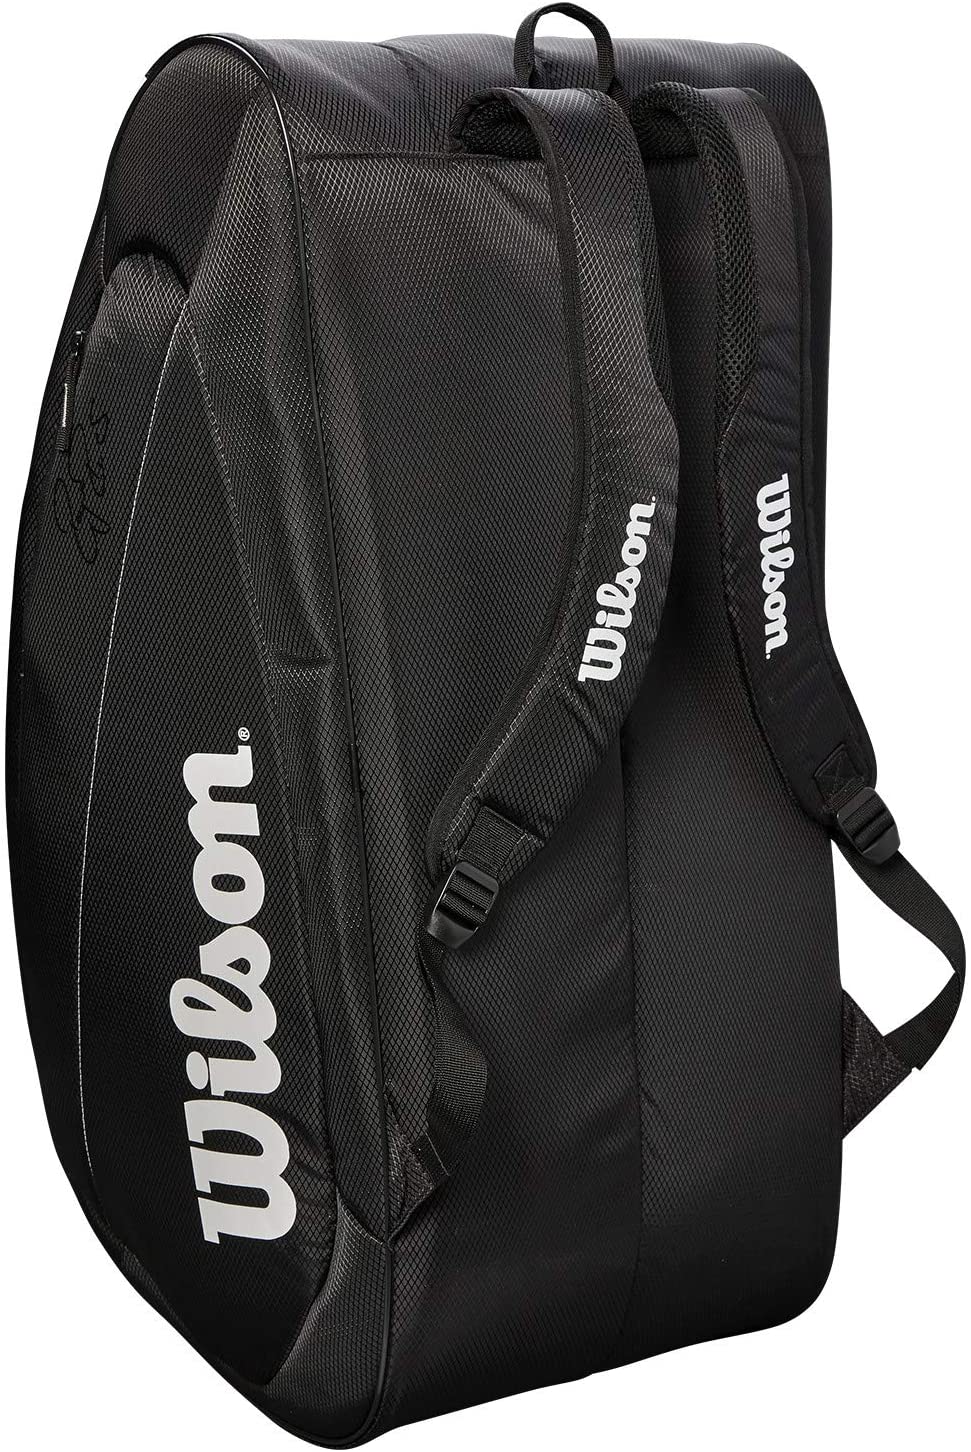 Wilson Fed Team Tennis Bag 12 Pack Features